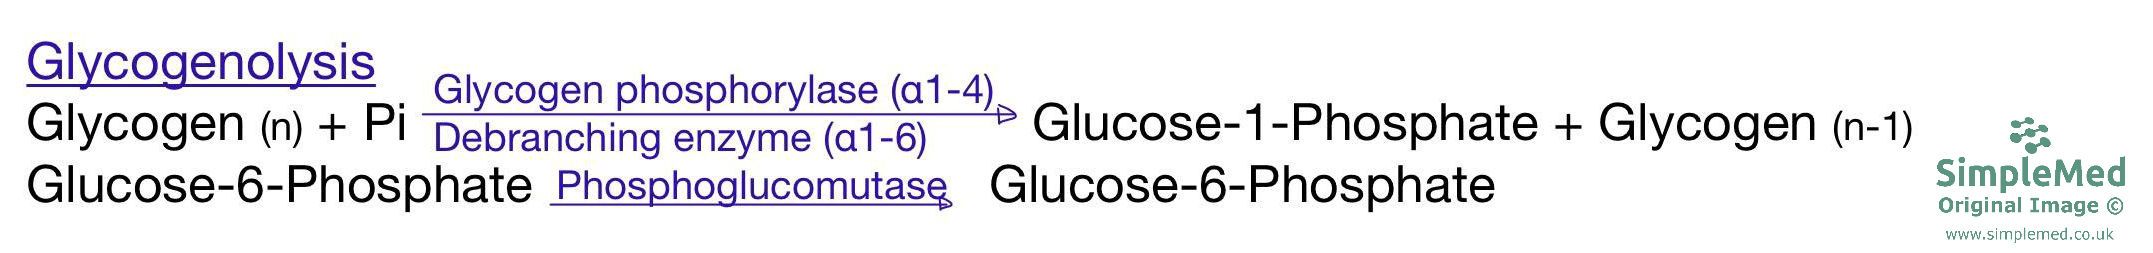 Glycogenolysis SimpleMed